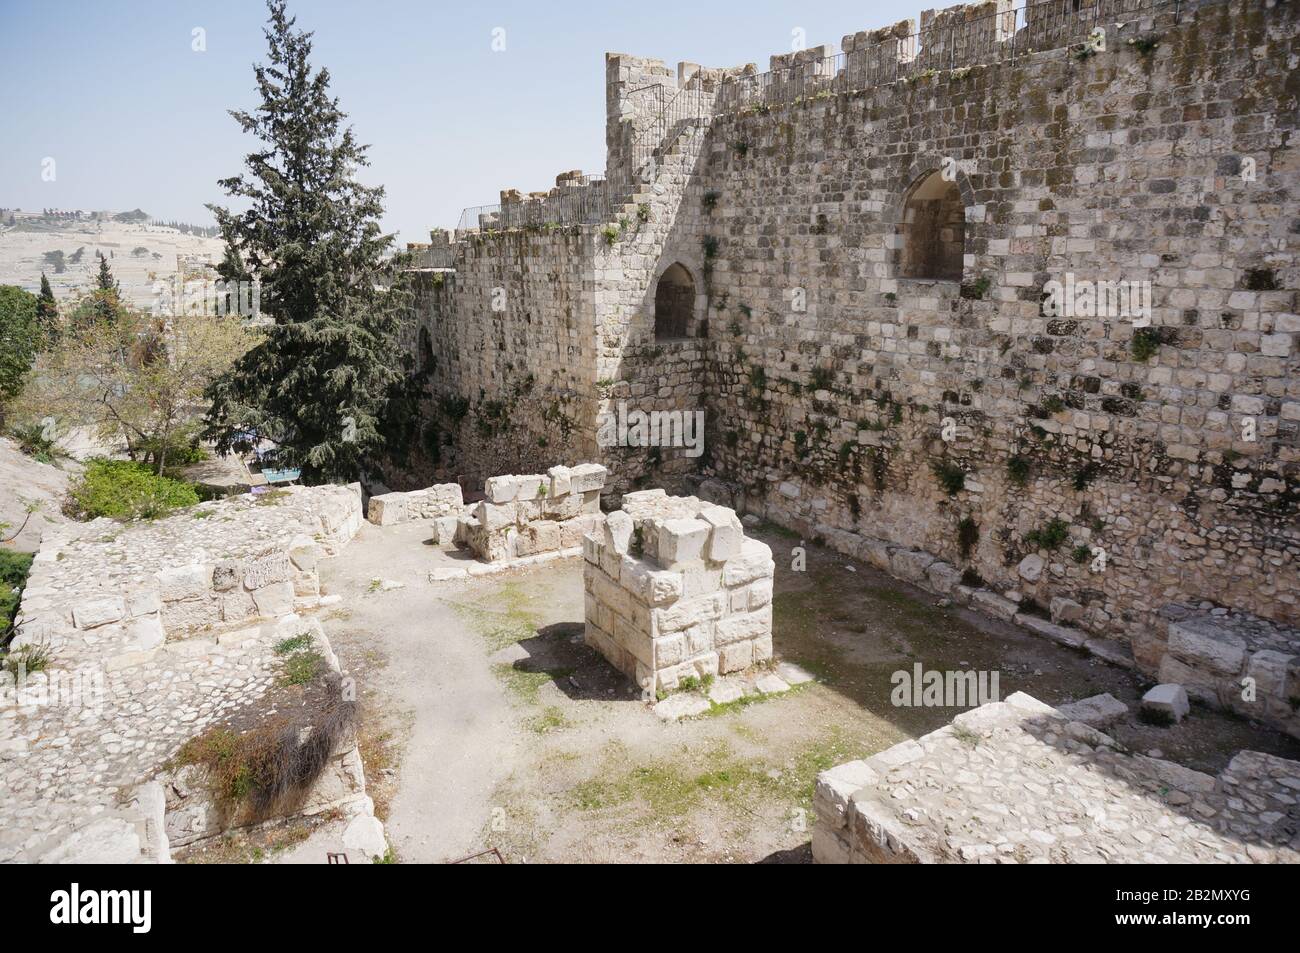 Storia e archeologia nella città vecchia di gerusalemme capitale d'israele Foto Stock